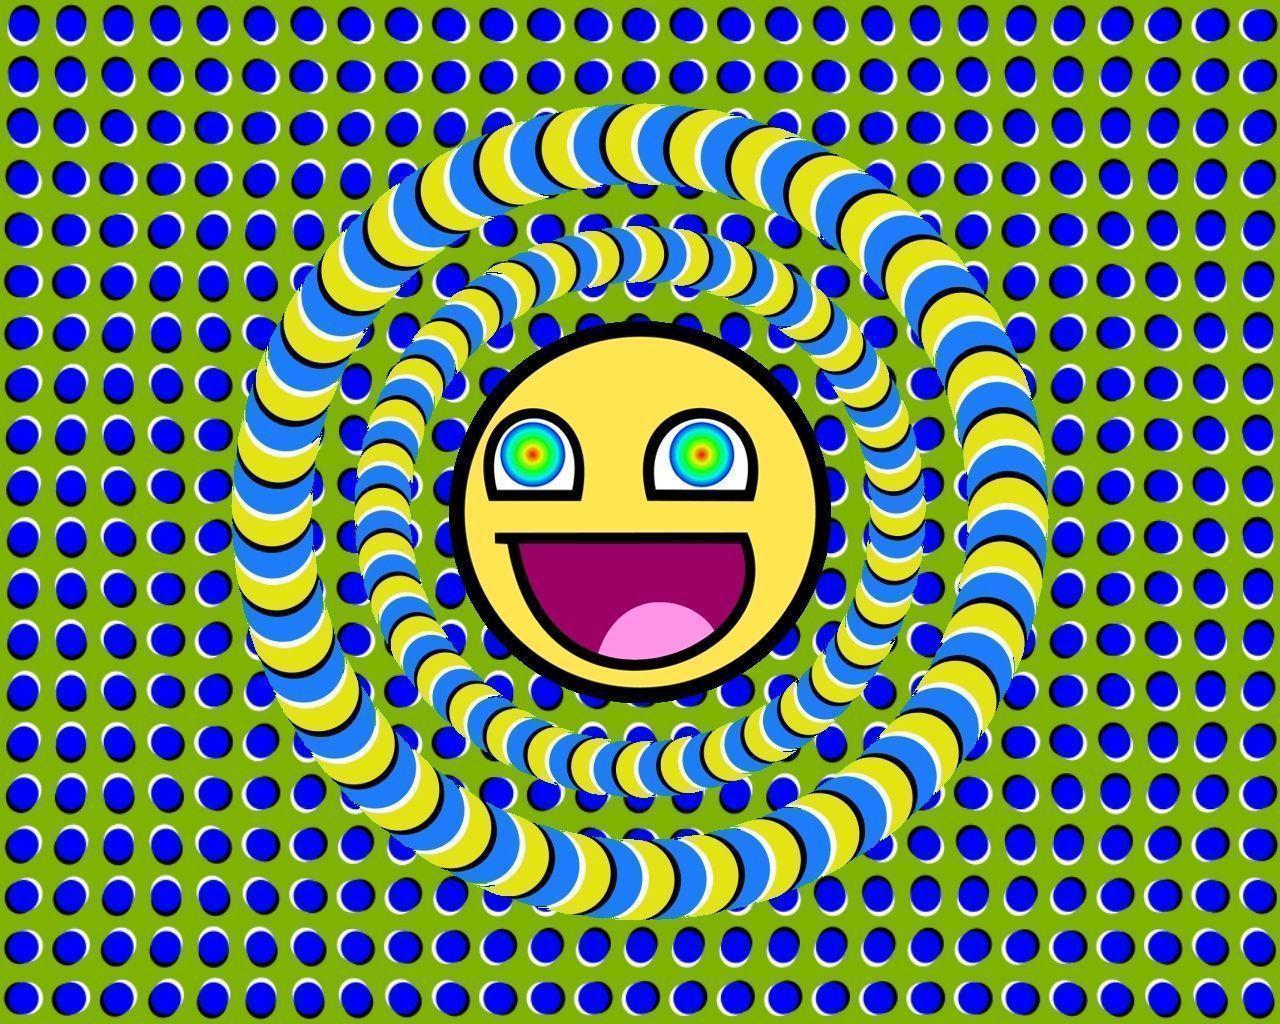 Epic Smiley Grunge Wallpaper by idontcare1996 on DeviantArt